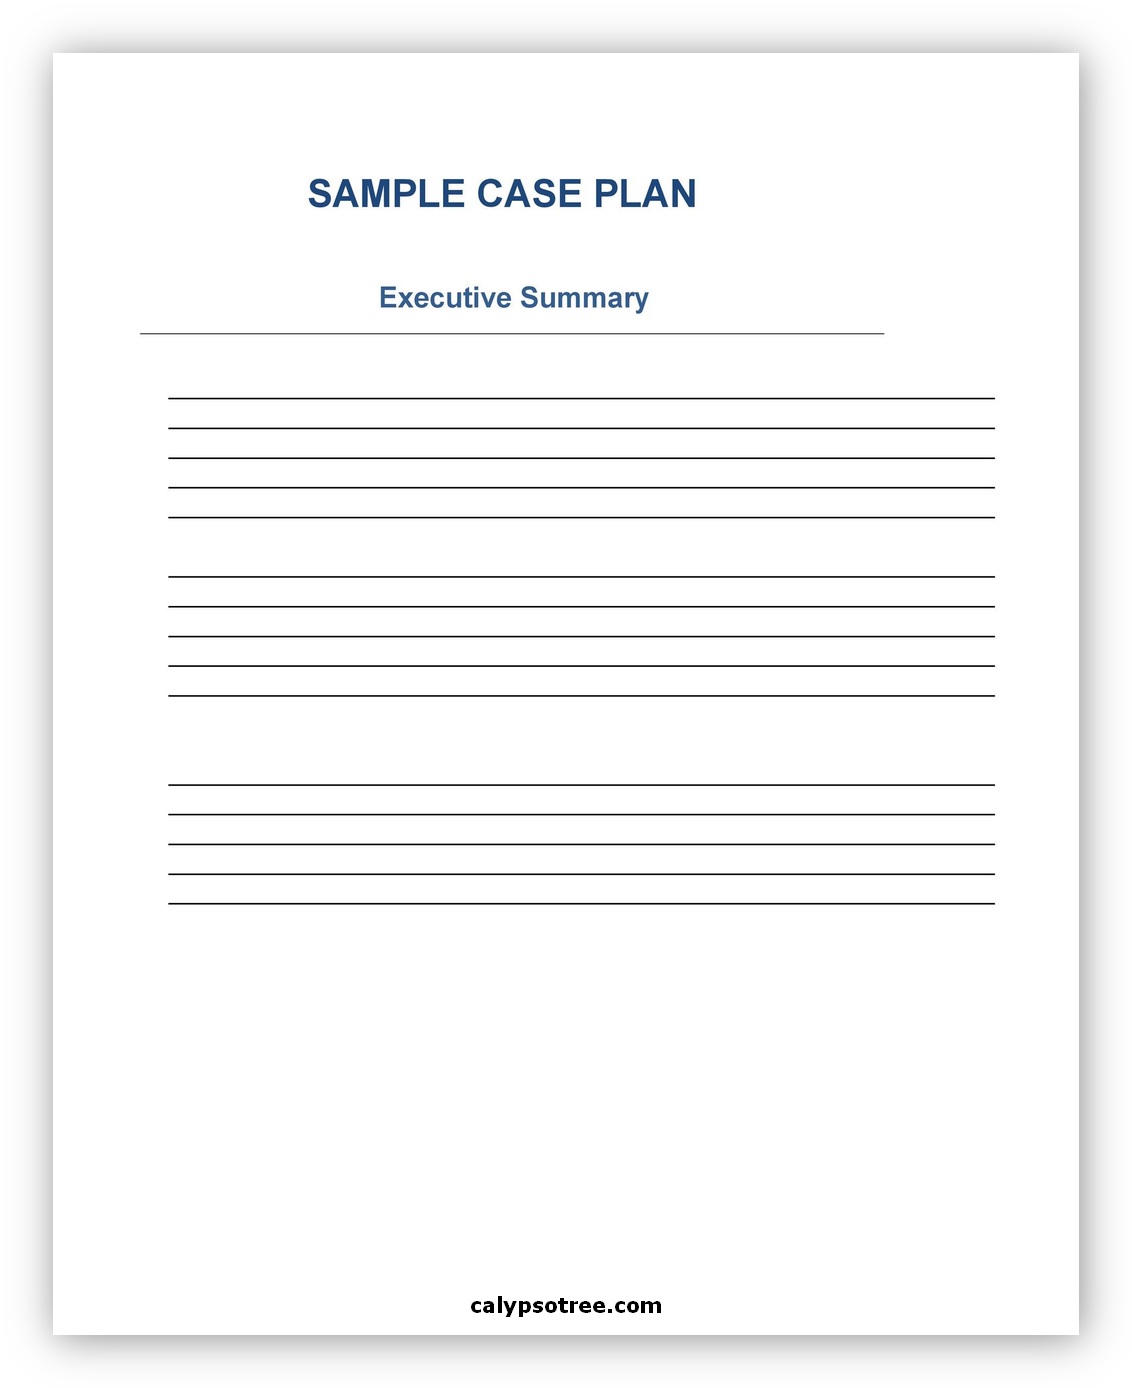 Business Case Sample 08